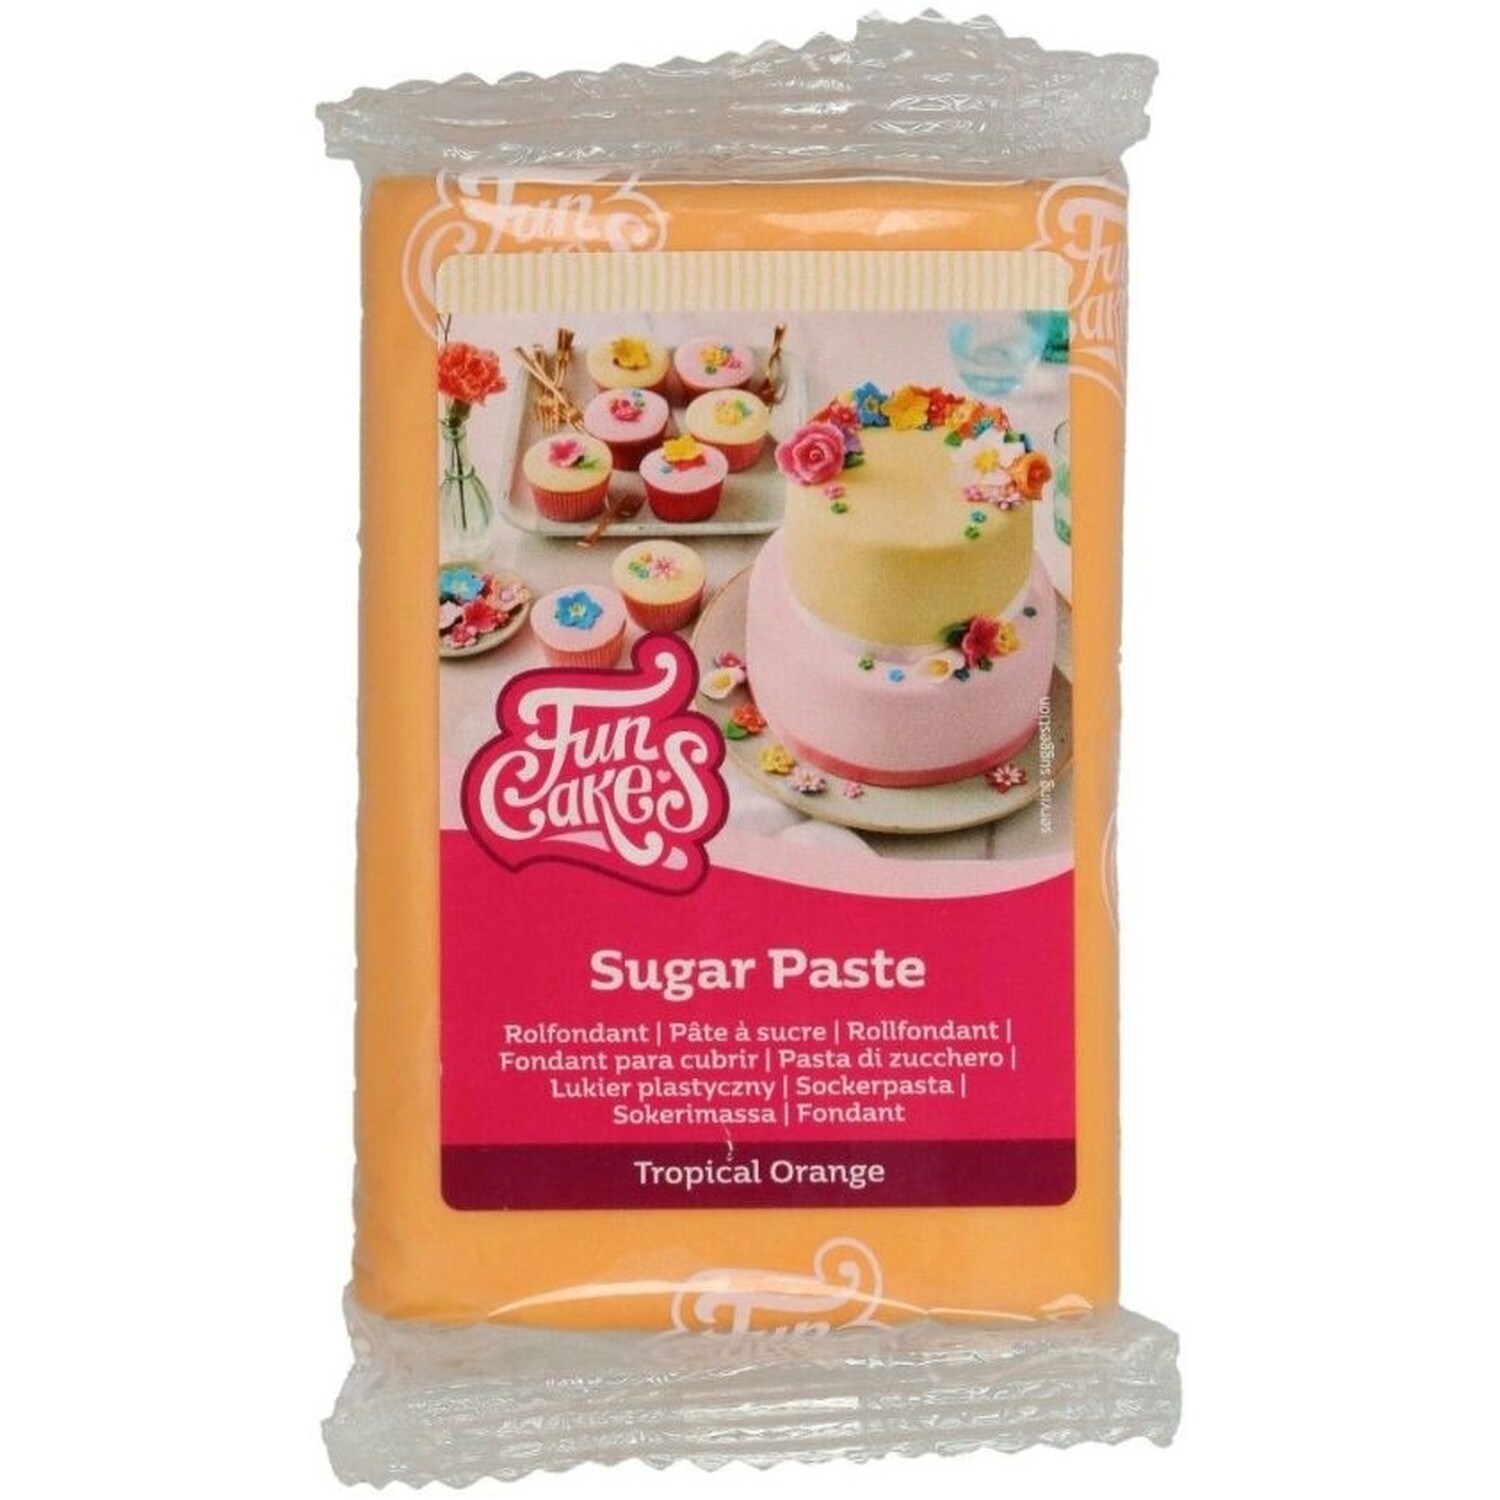 Funcakes Sugar Paste - Tropical Orange Image